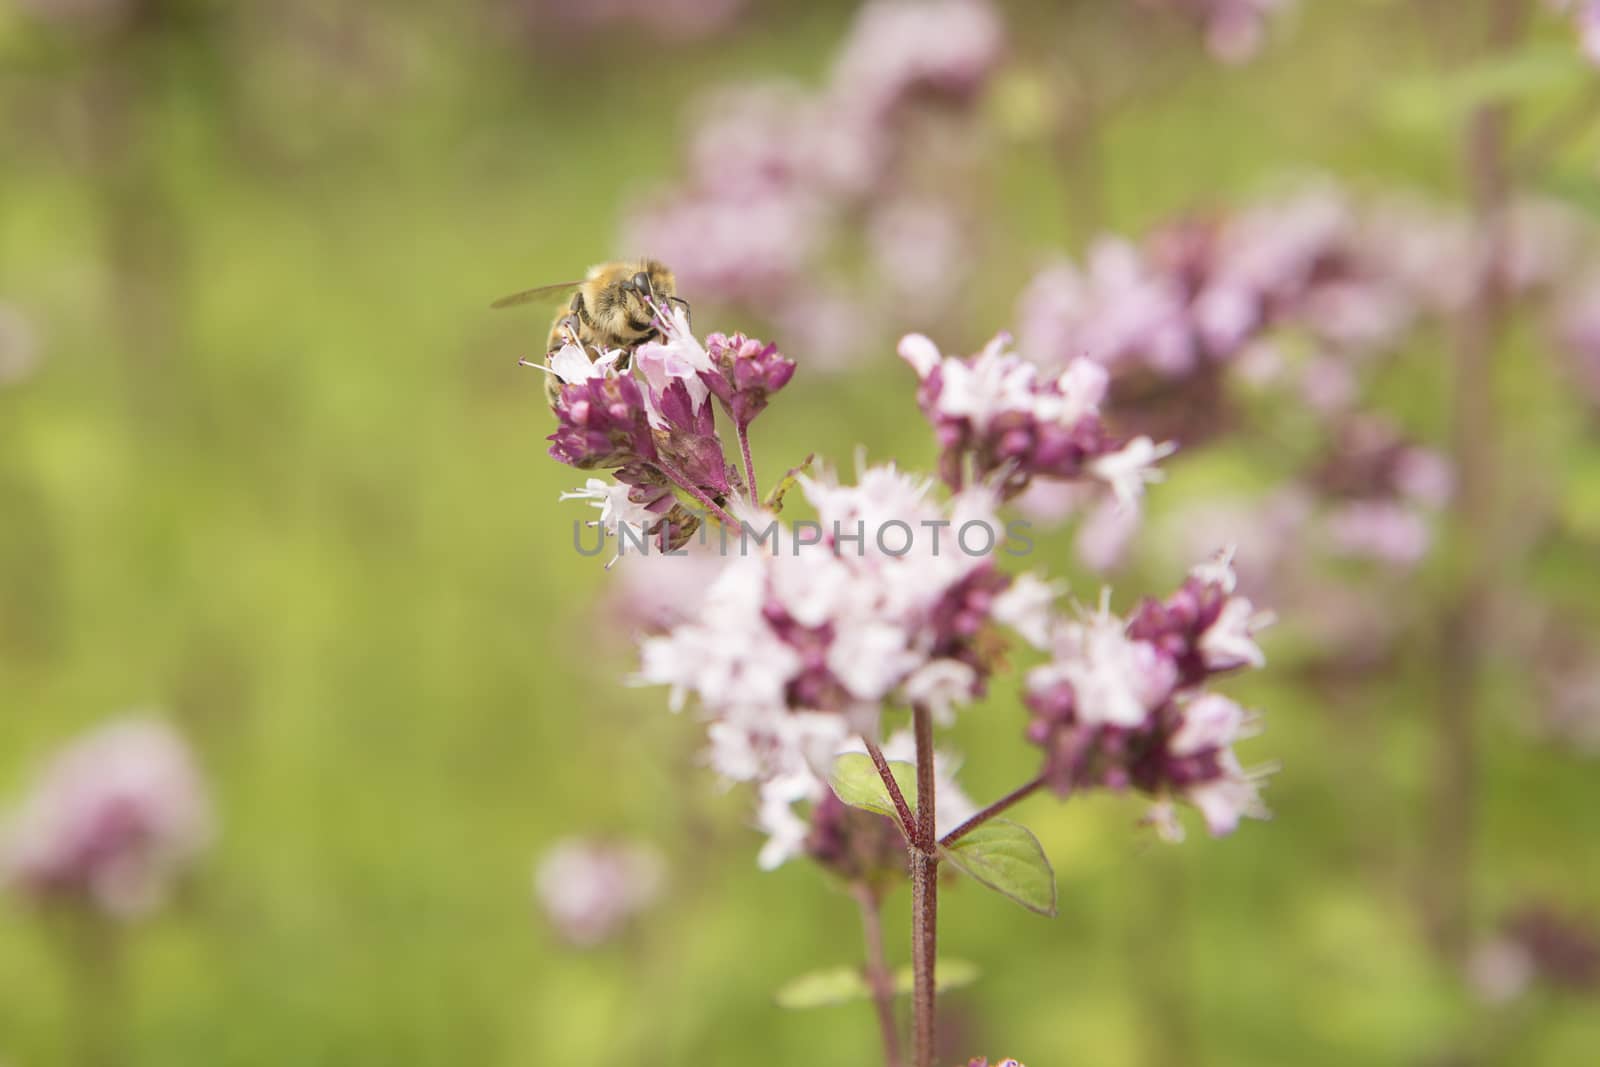 Honey bee takes pollen from purple flower by mattkusb